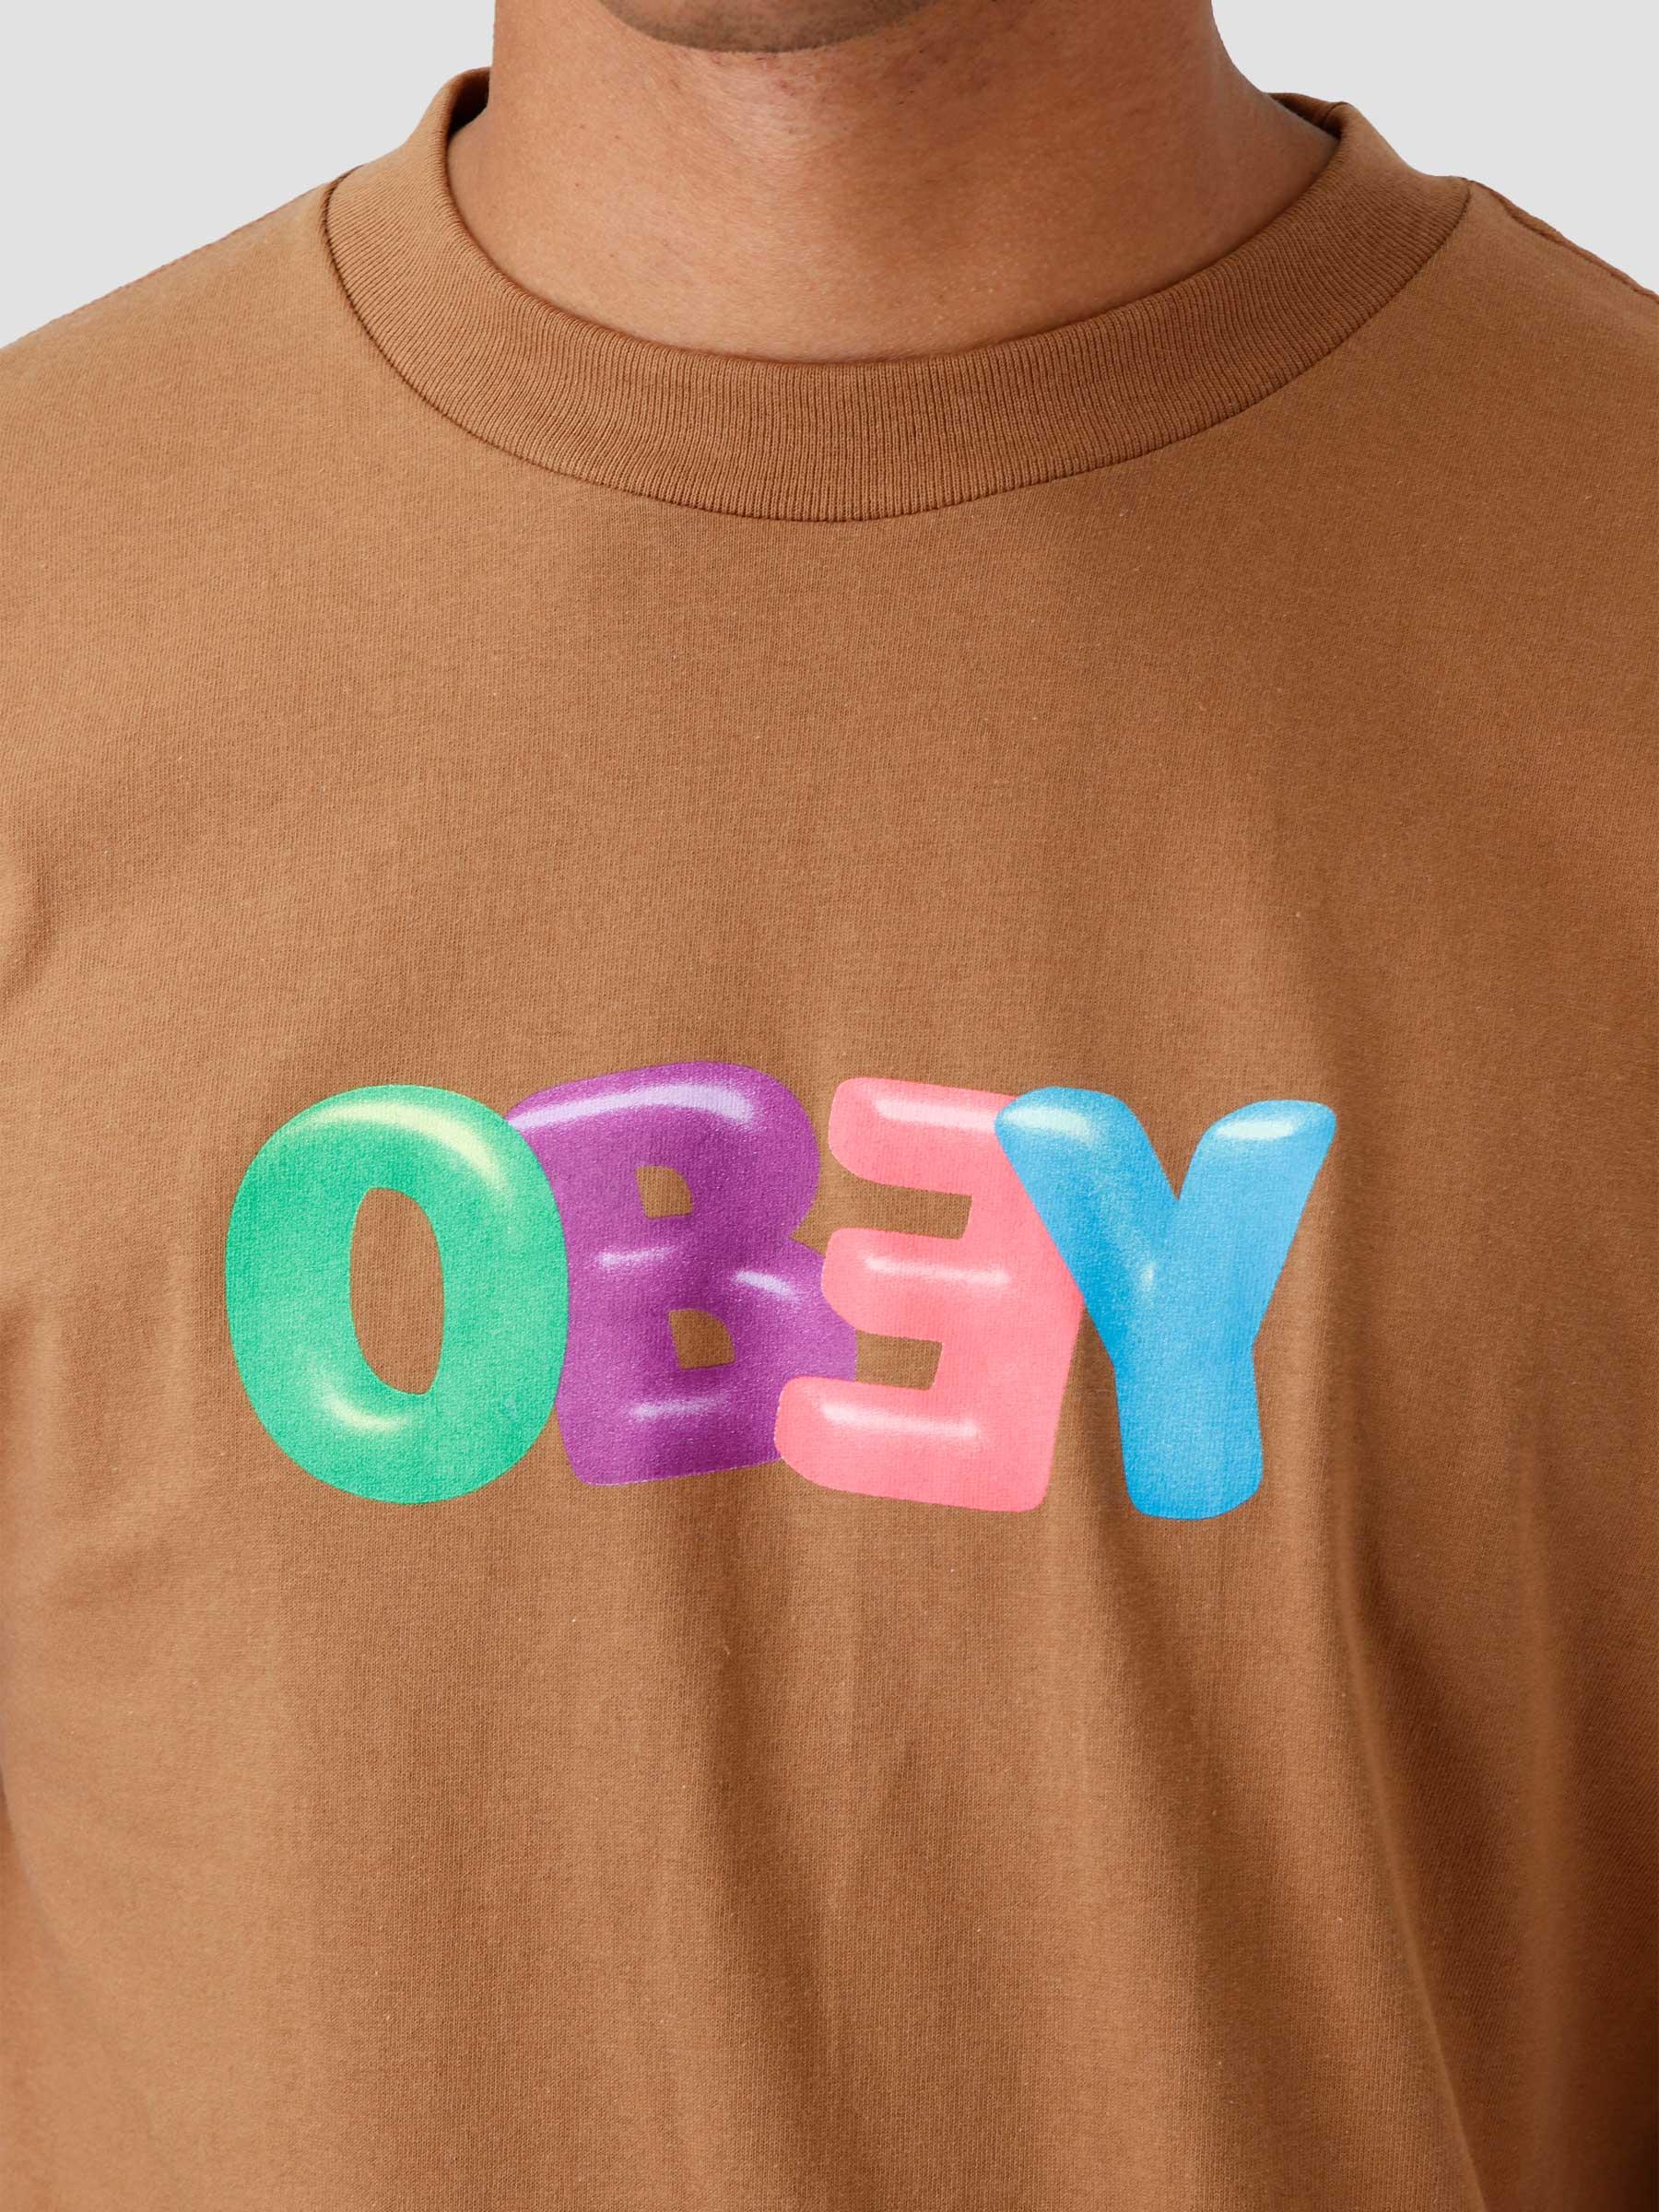 Obey Bubble T-shirt Brown Sugar 165263173